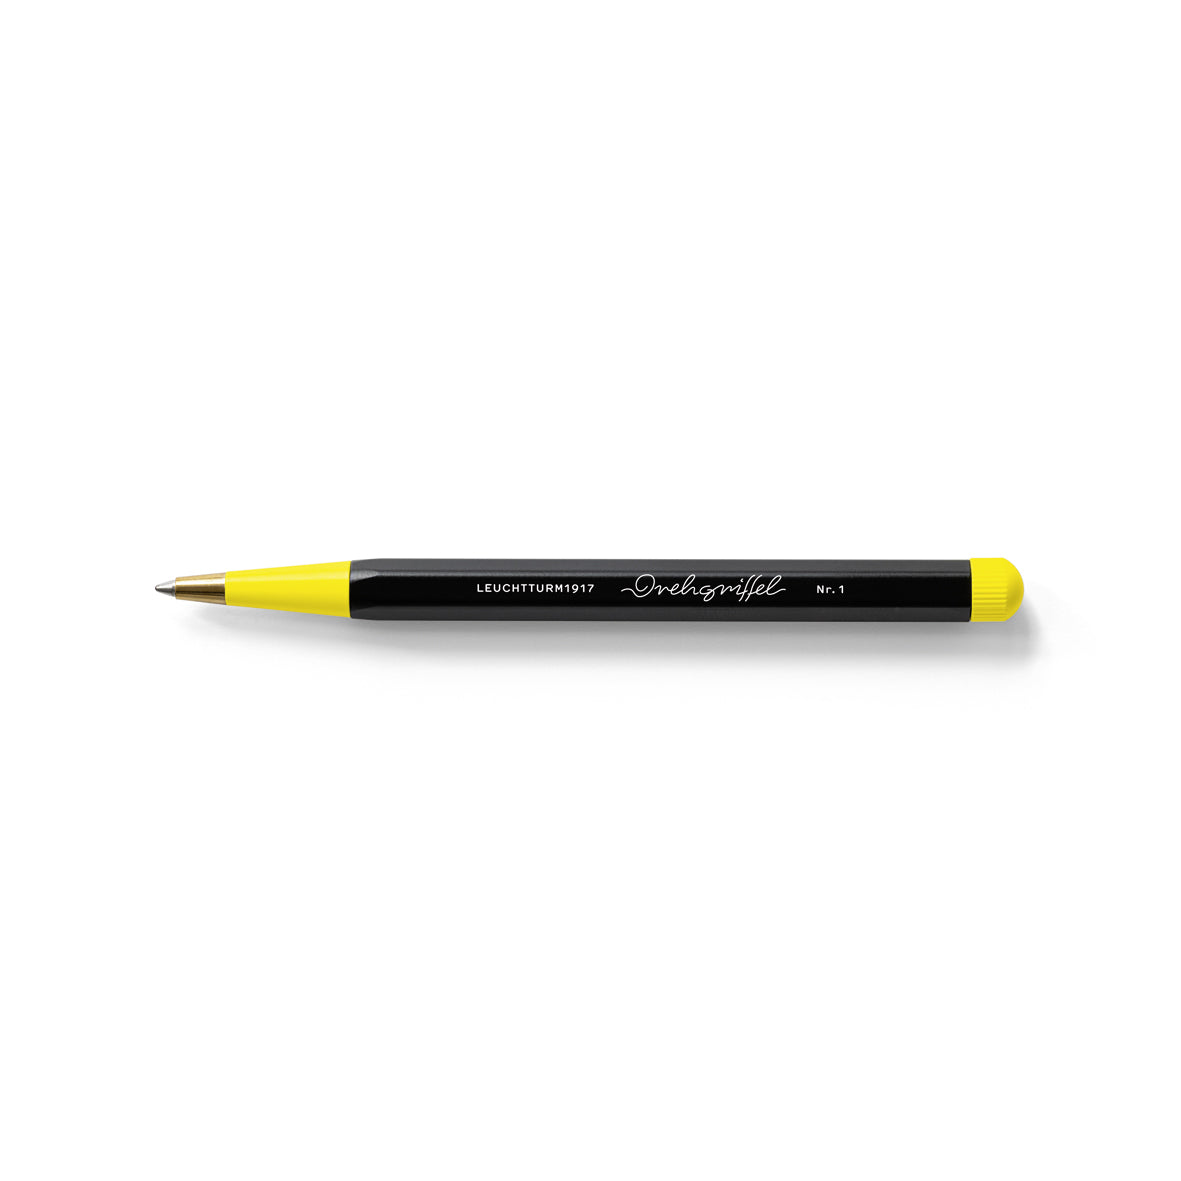 OCTÀGON DESIGN, Drehgriffel Pen , black and yellow color, white typography.